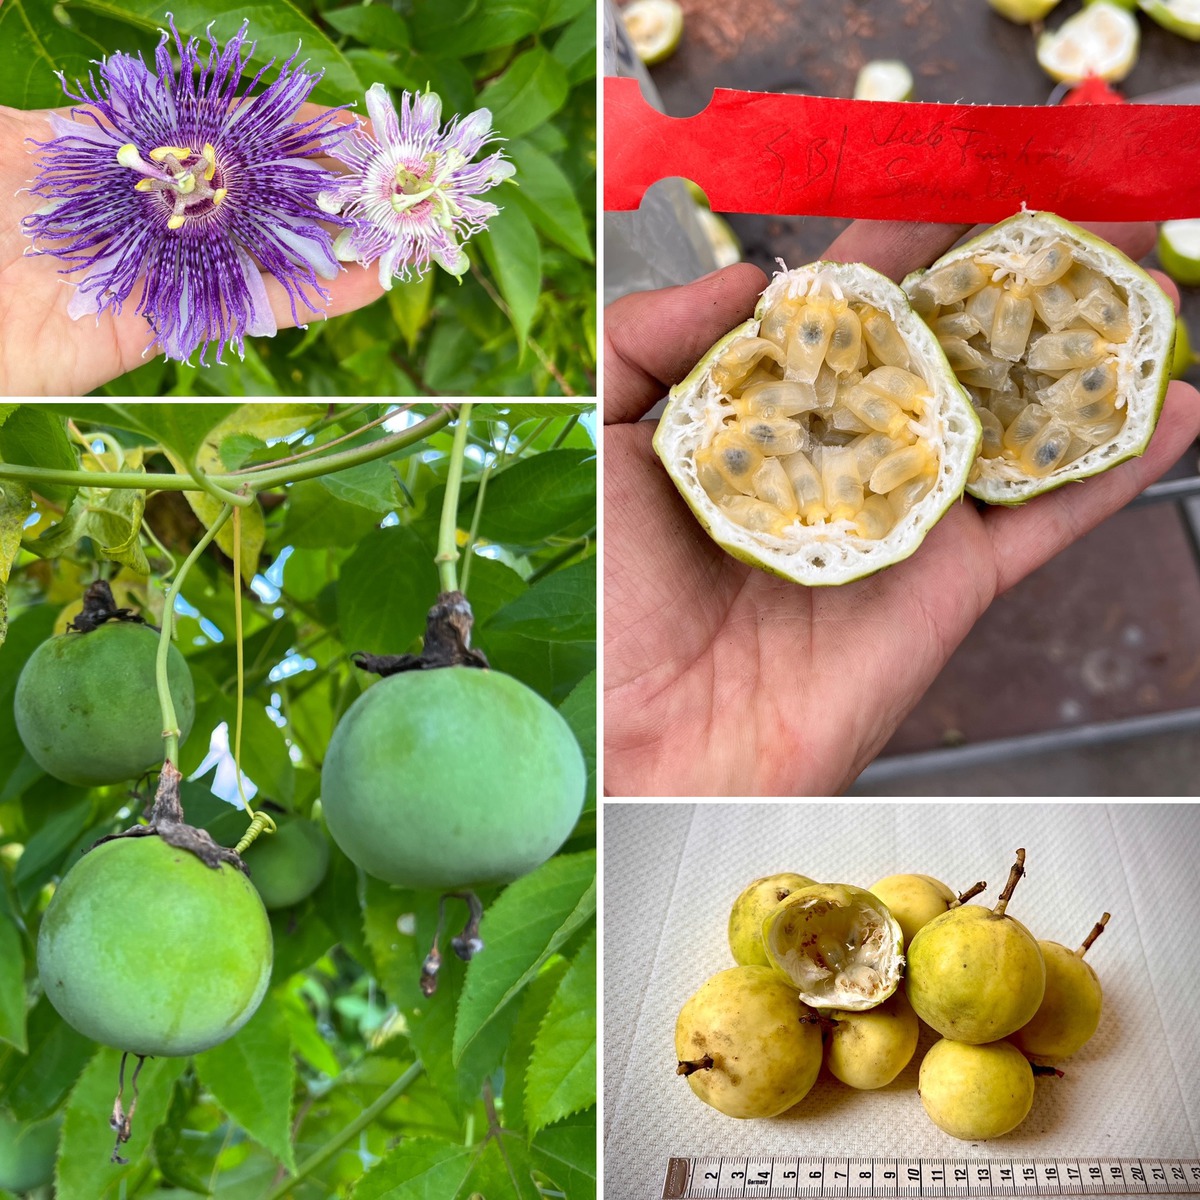 Zchtung, Passiflora, Passionsfrucht, Passiflora incarnata, Eia Popeia